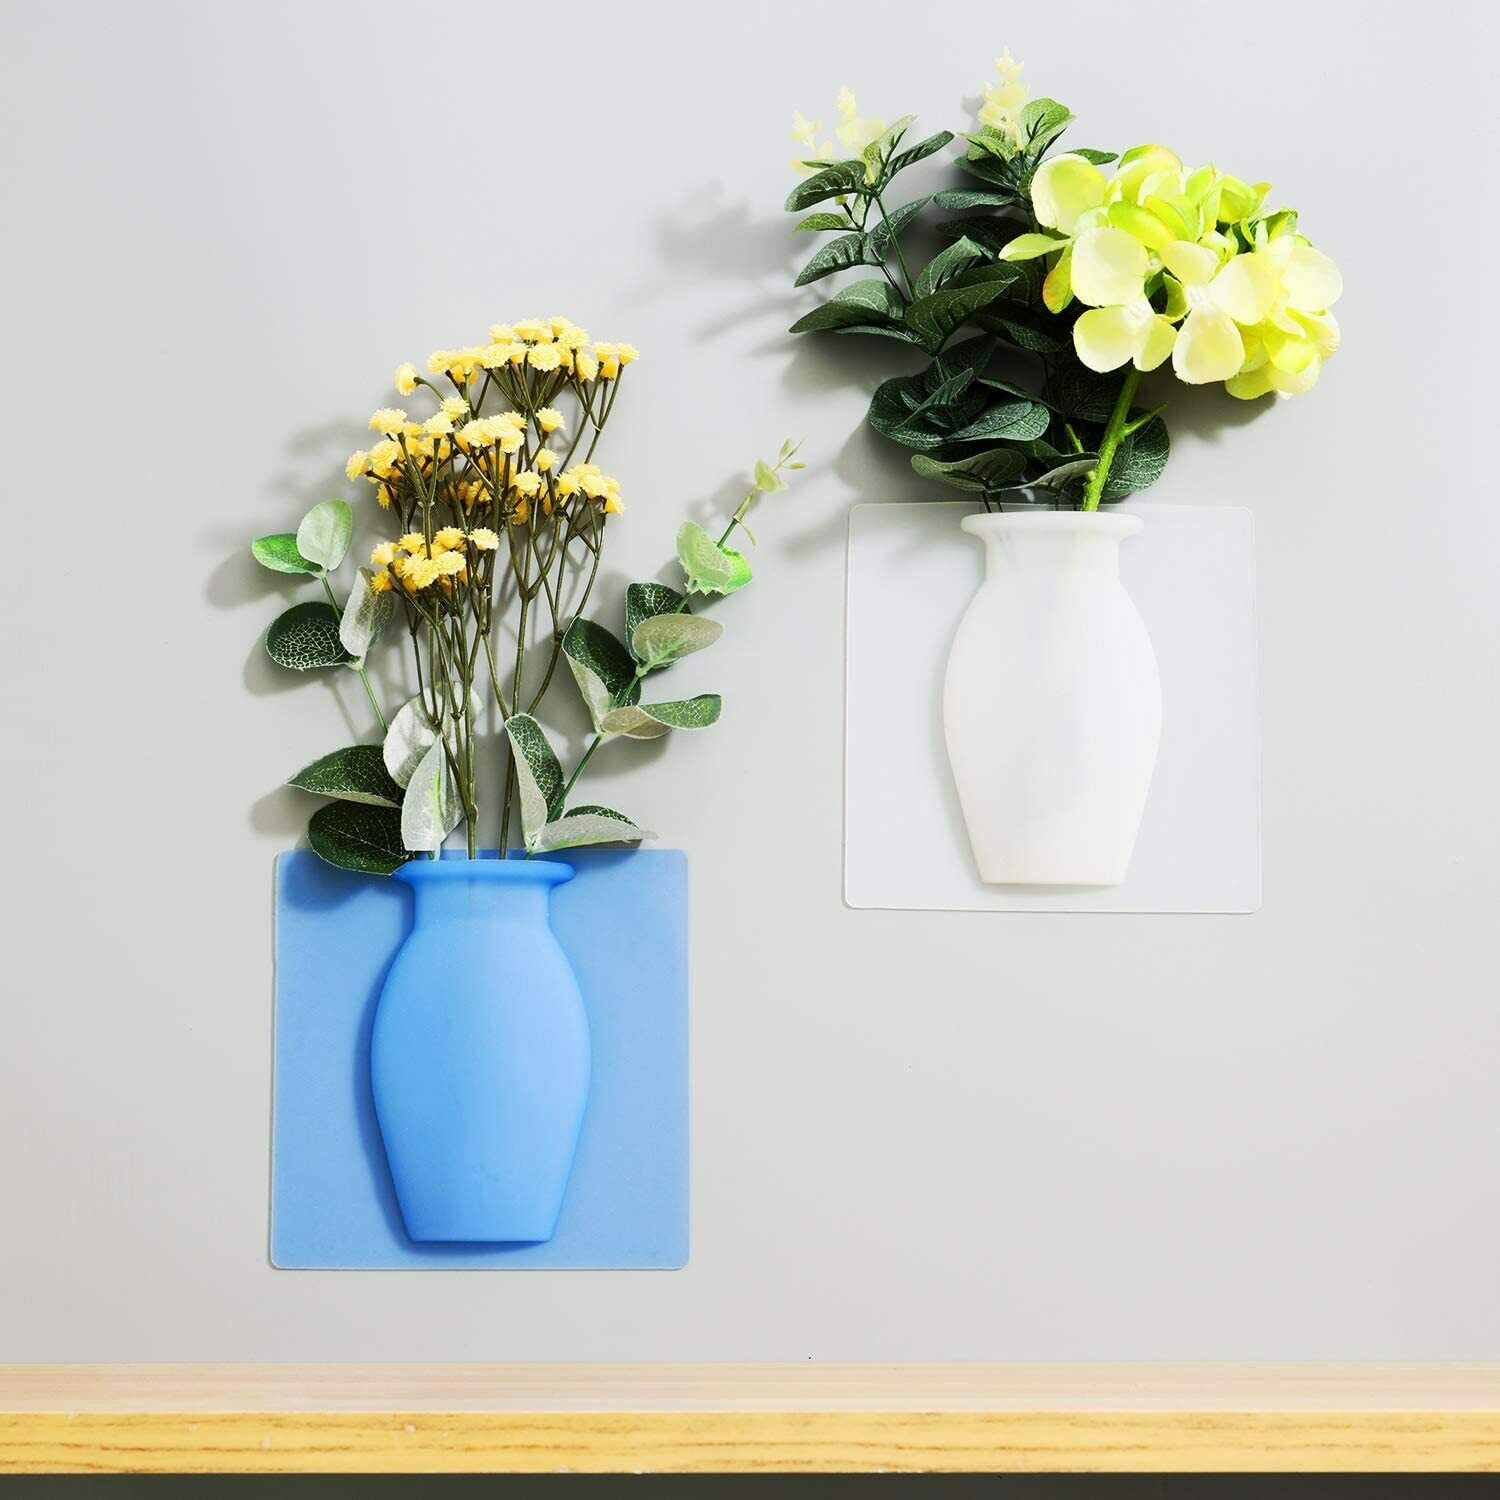 Magic Rubber Silicone Flower Vase Sticky Flower Vases Adhesive Wall Hanging Vase